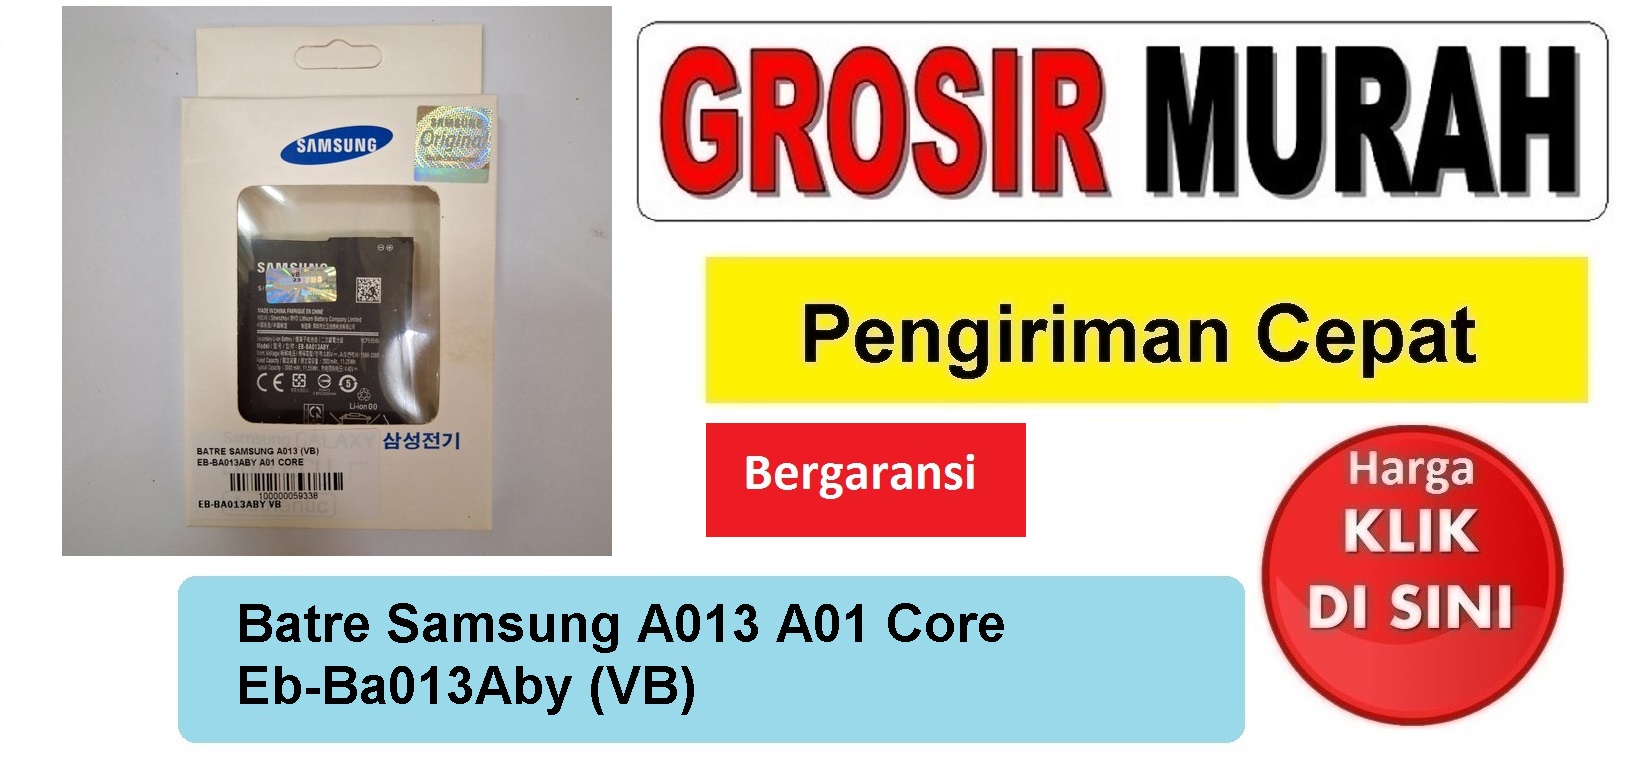 Batre Samsung A013 A01 Core Eb-Ba013Aby (VB) Baterai Battery Bergaransi Batere